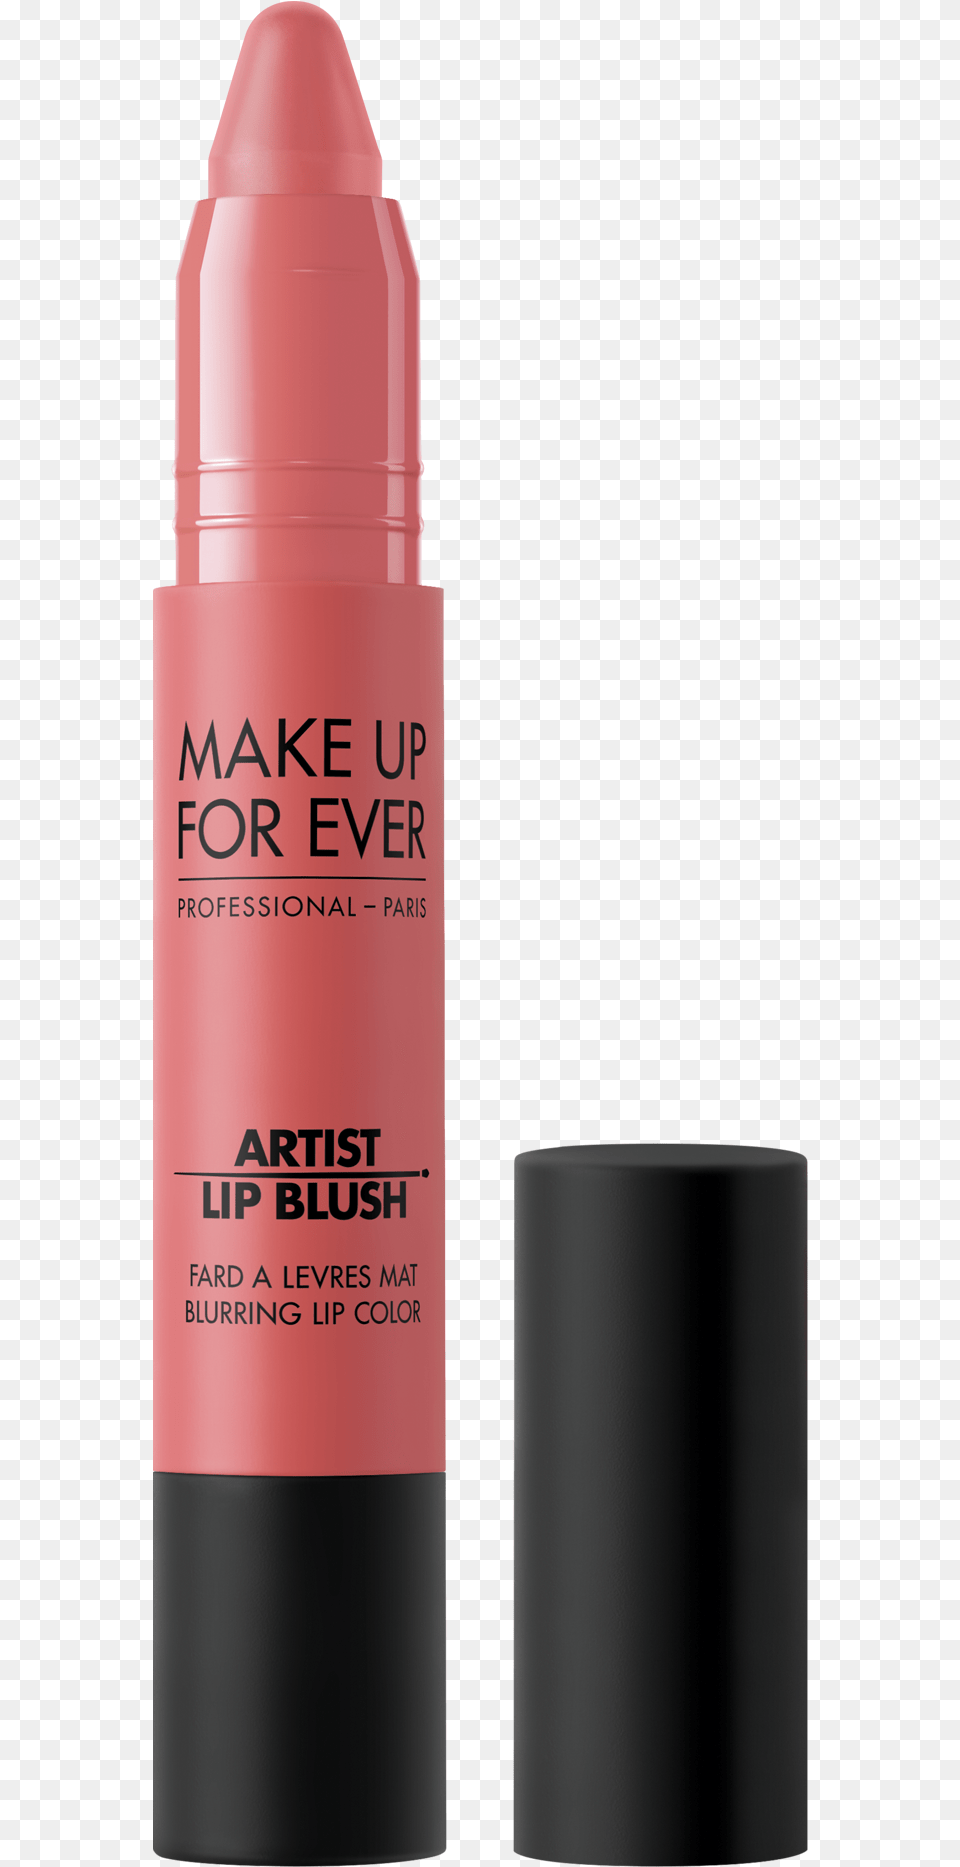 Artist Lip Blush Artist Lip Blush Mufe, Cosmetics, Lipstick Free Png Download